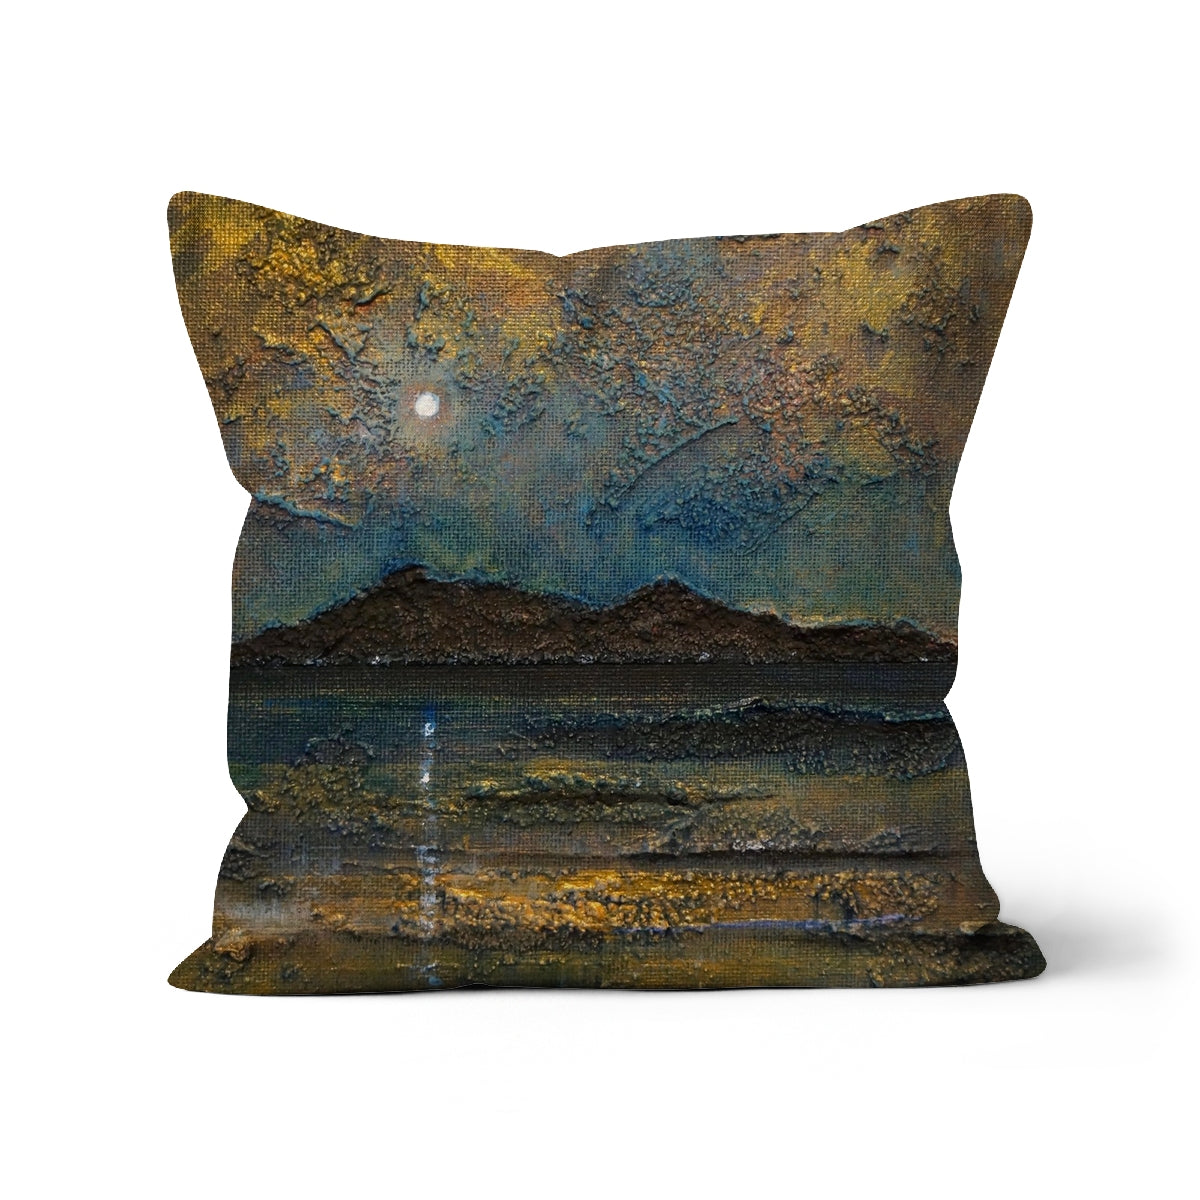 Arran Moonlight Art Gifts Cushion-Cushions-Arran Art Gallery-Canvas-18"x18"-Paintings, Prints, Homeware, Art Gifts From Scotland By Scottish Artist Kevin Hunter